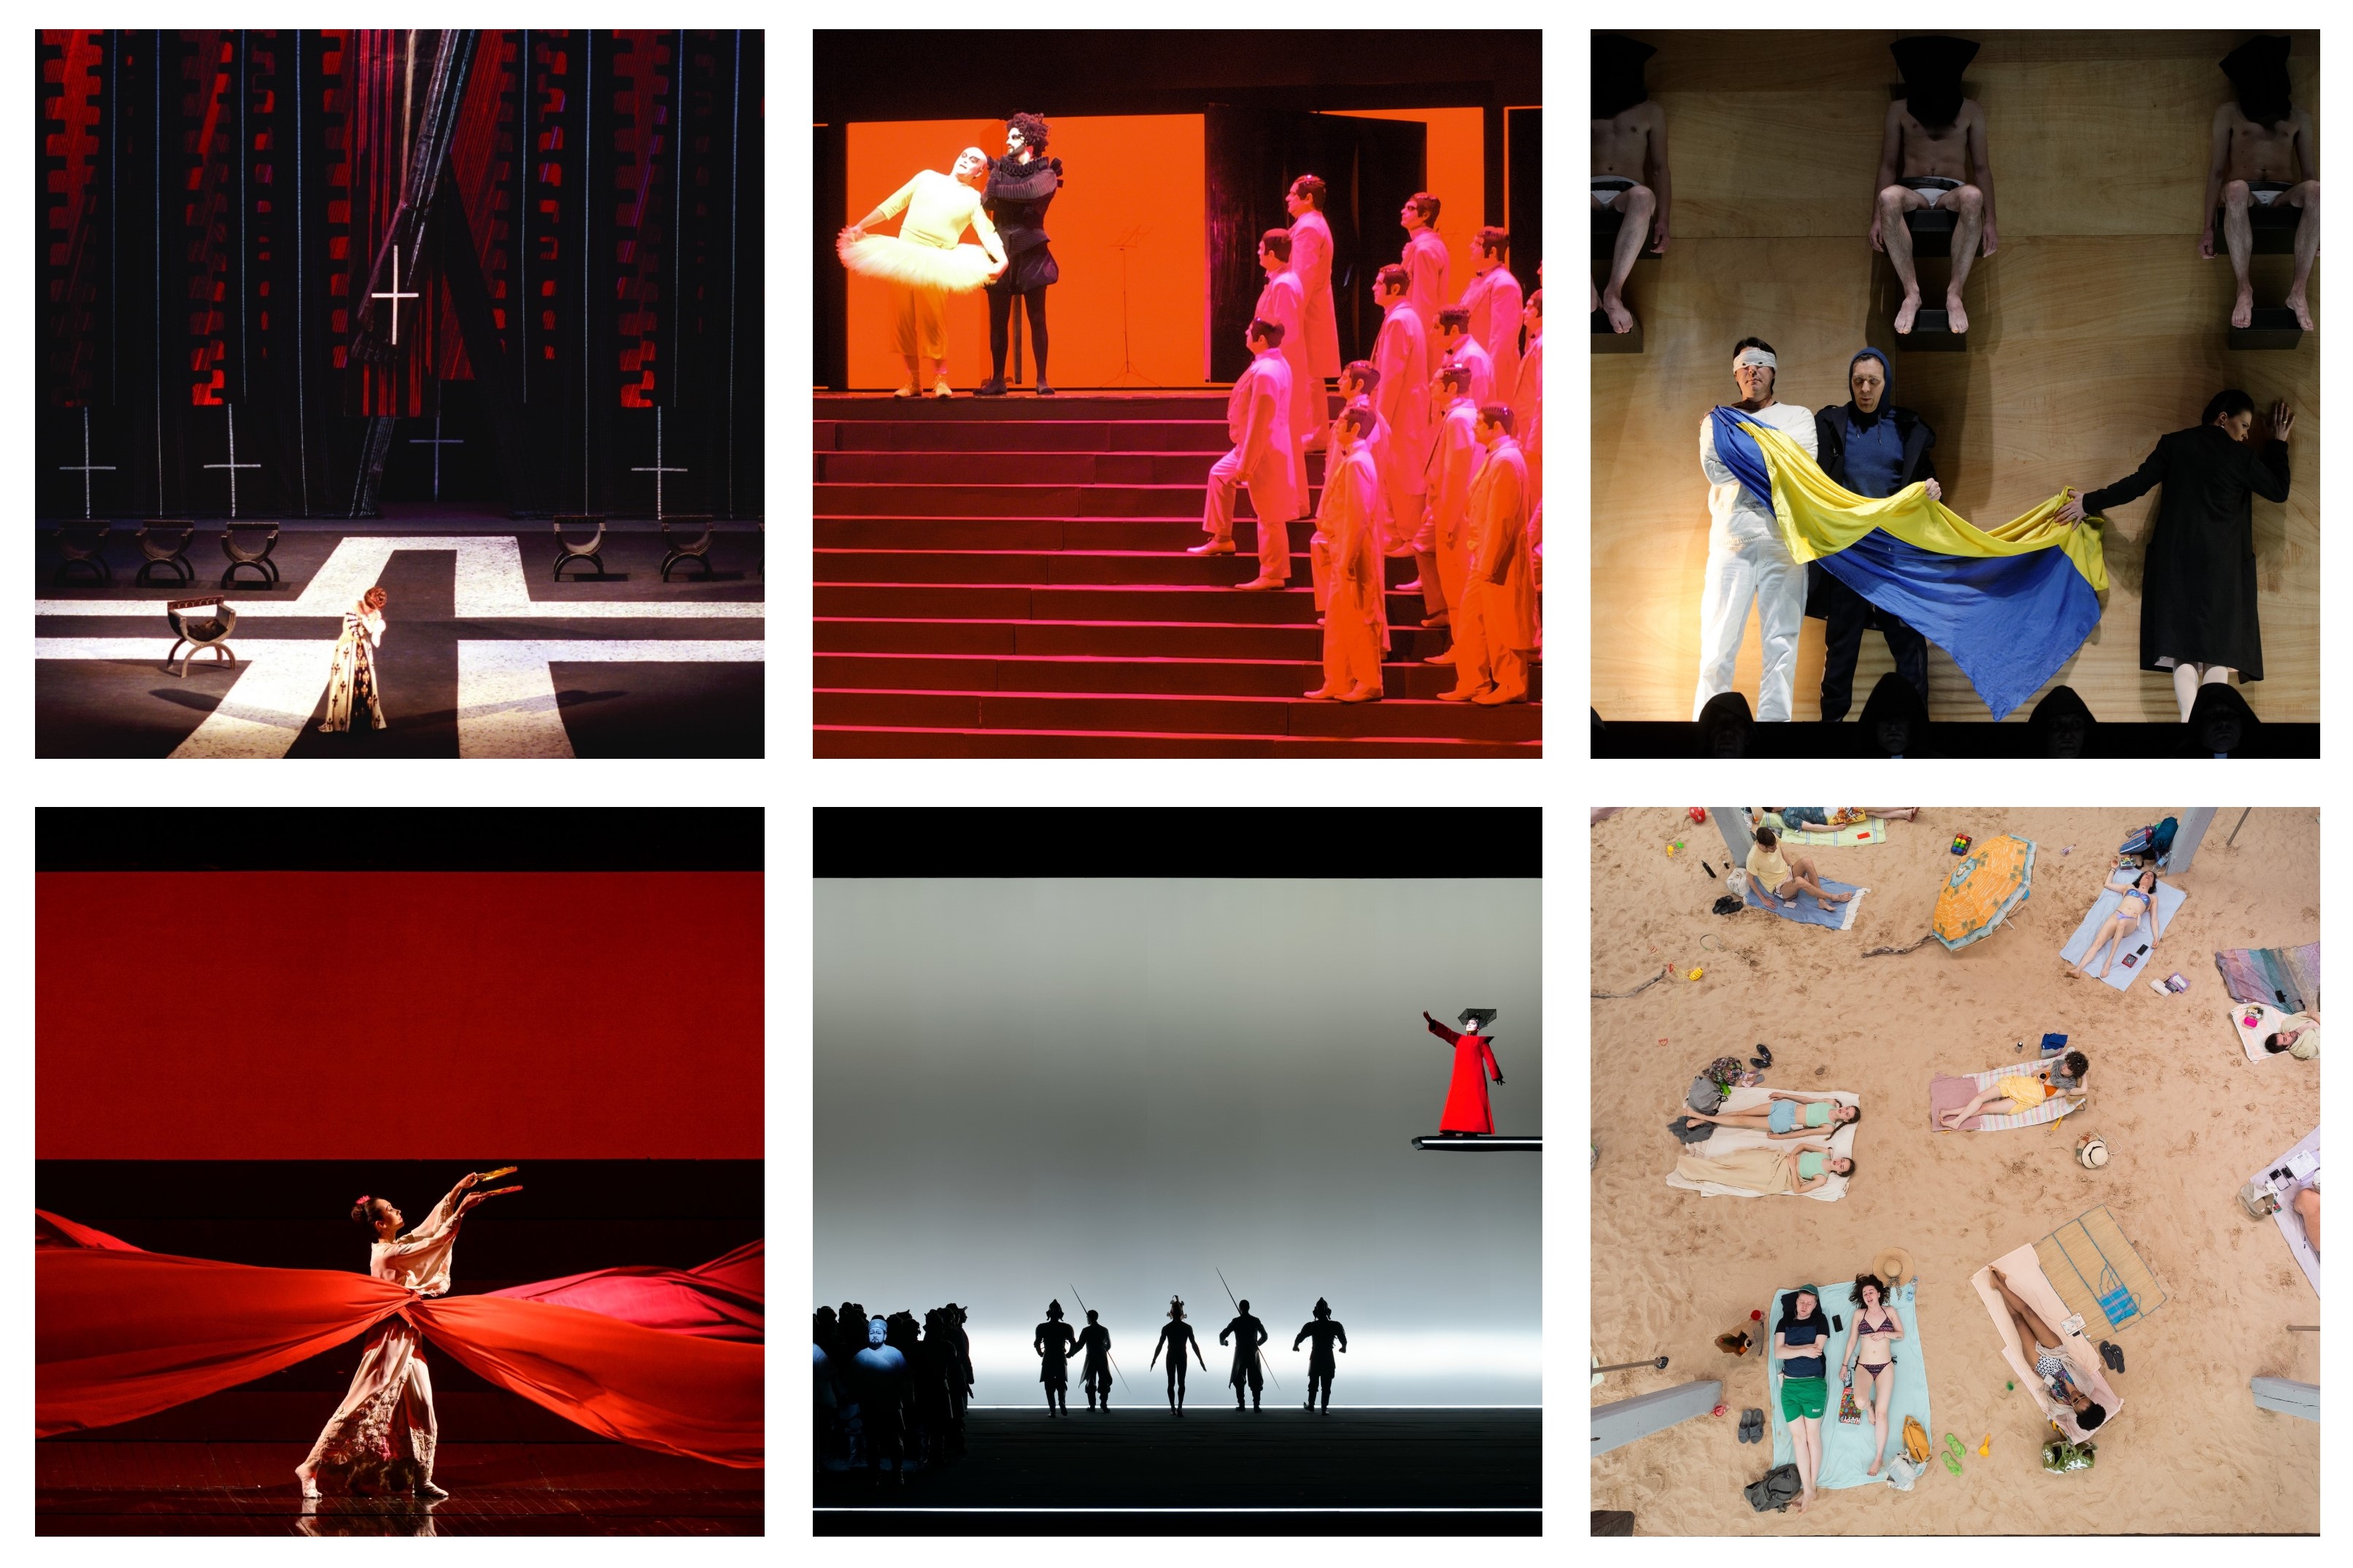 Collage of famous opera productions: “Don Carlos” (1981), “Rigoletto” (2003), “Don Carlos” (2016), “Madama Butterfly” (2006), “Turandot” (2019), “Sun & Sea (Marina)” (2017).